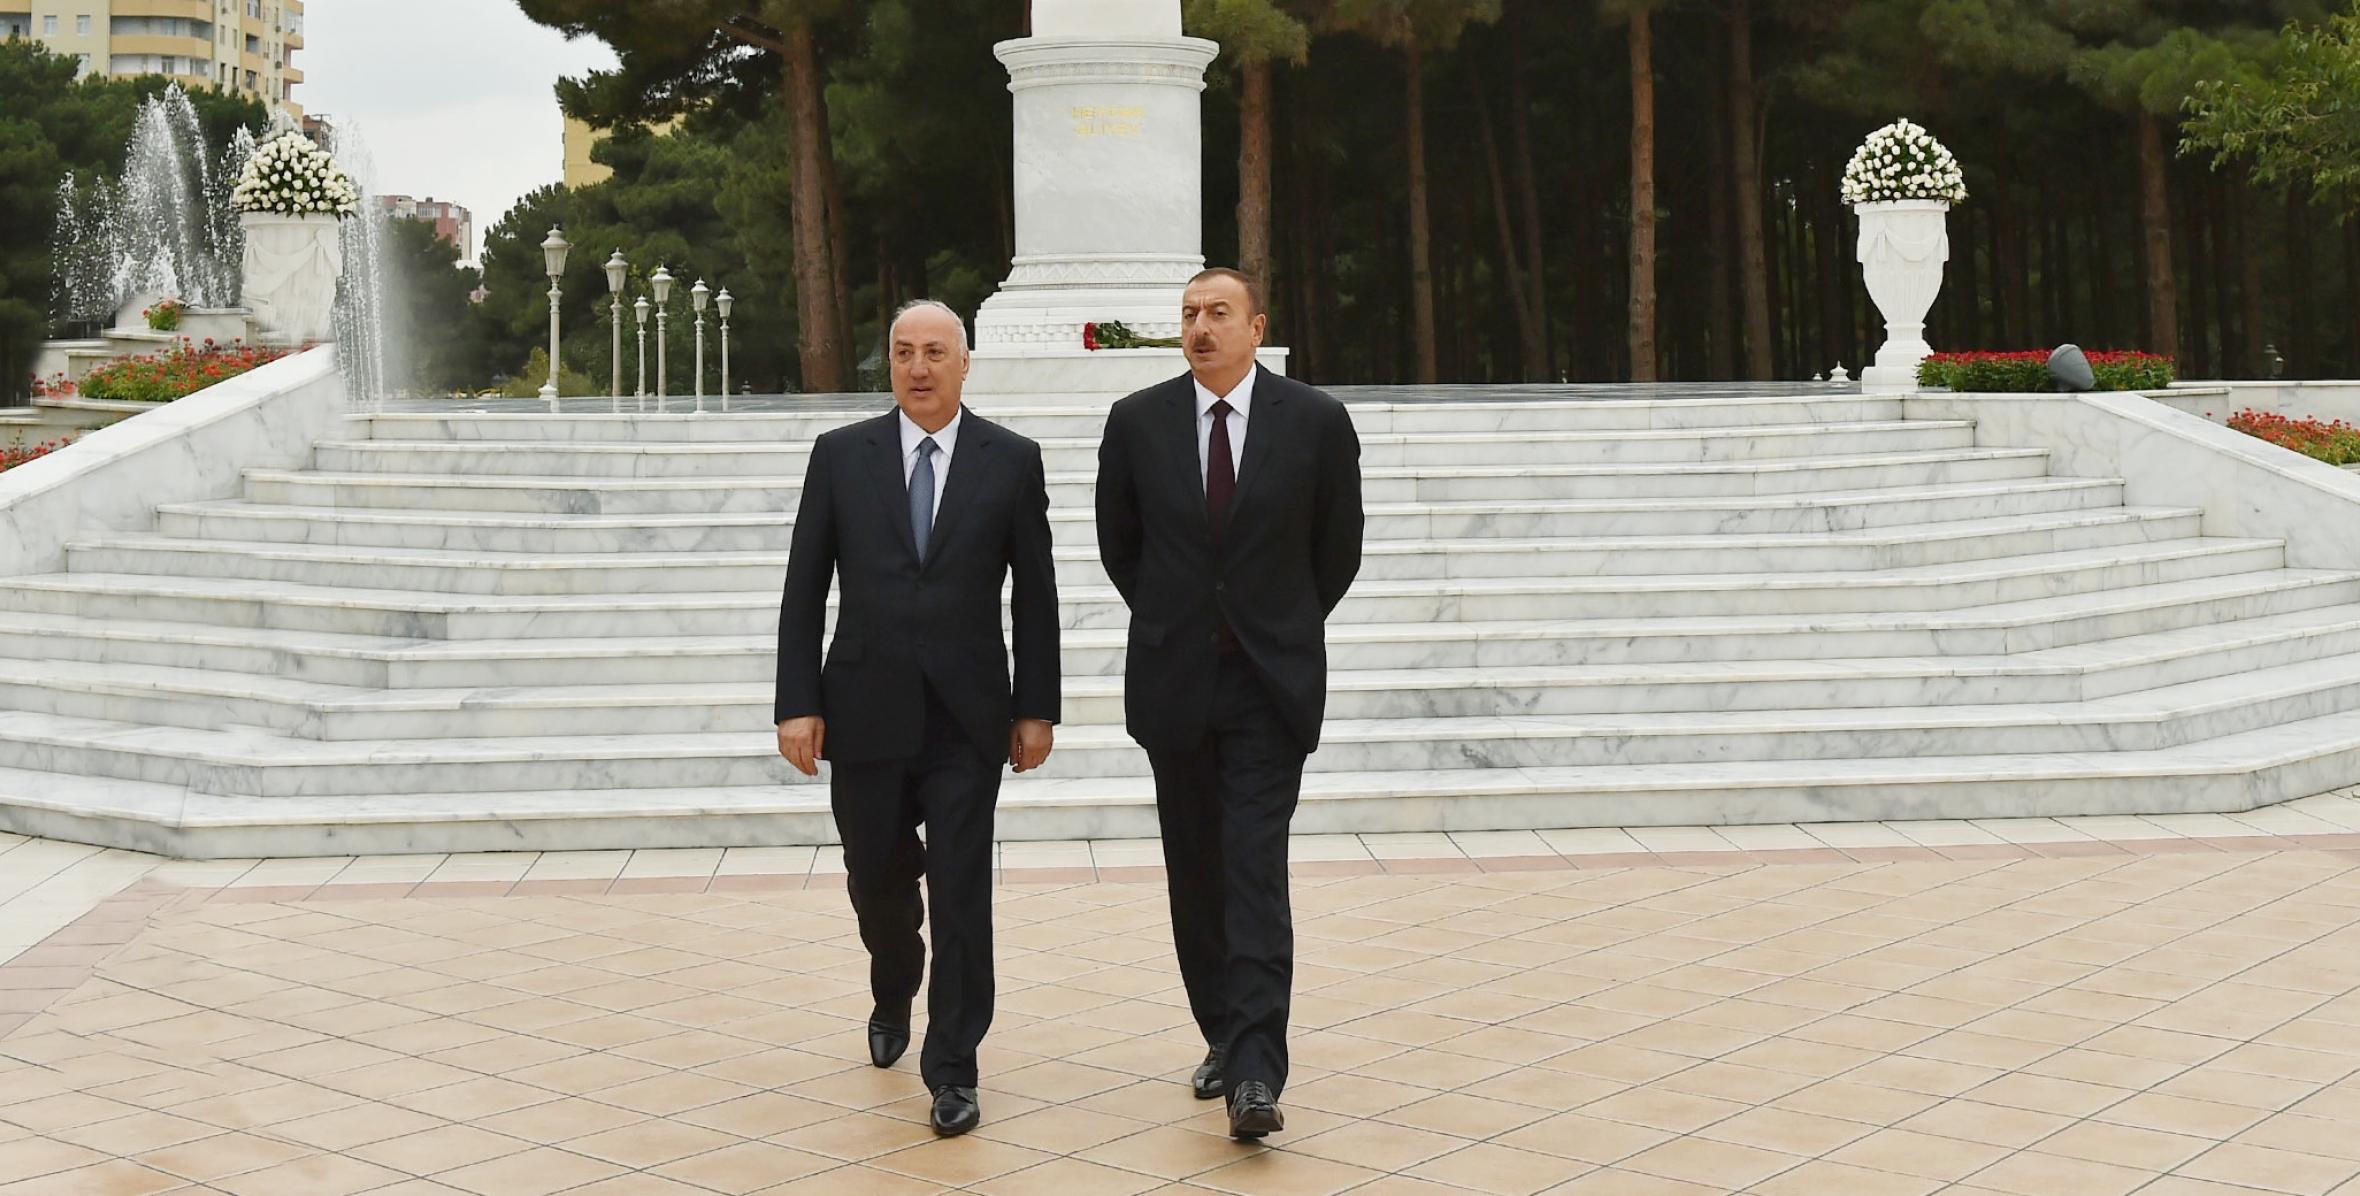 Ilham Aliyev visited a statue of national leader Heydar Aliyev in Khirdalan